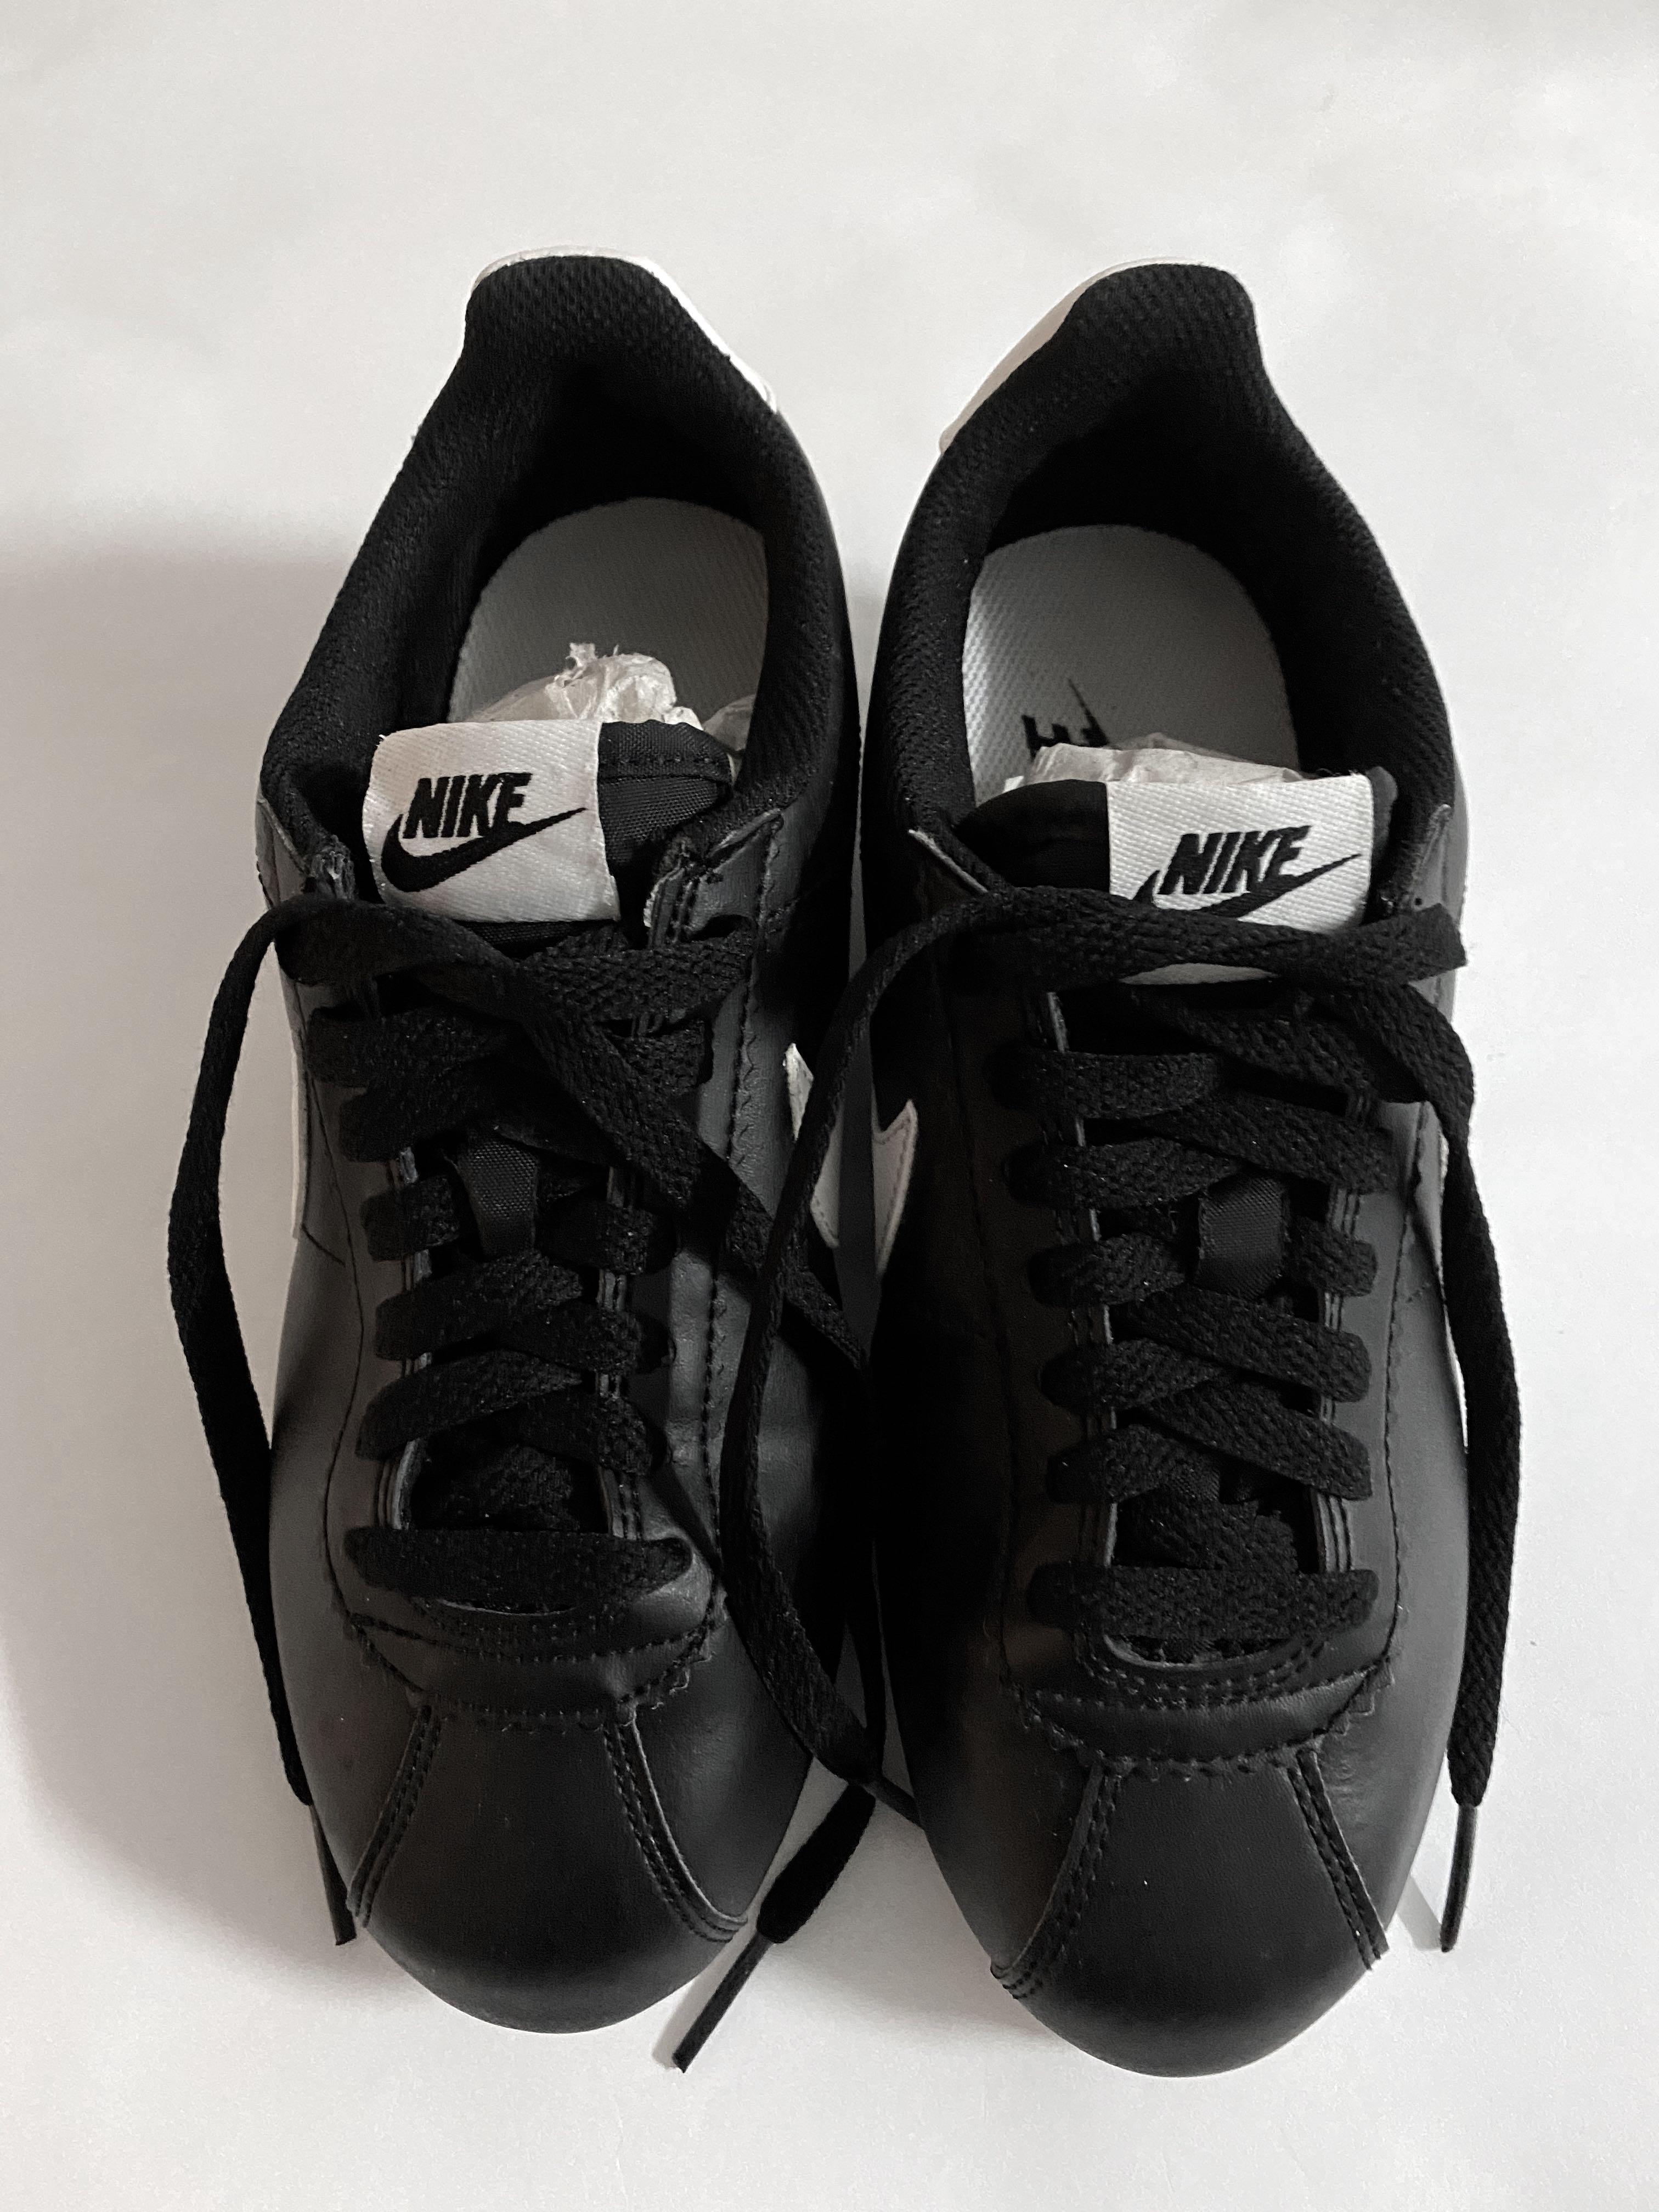 Authentic Nike Classic Cortez Leather 